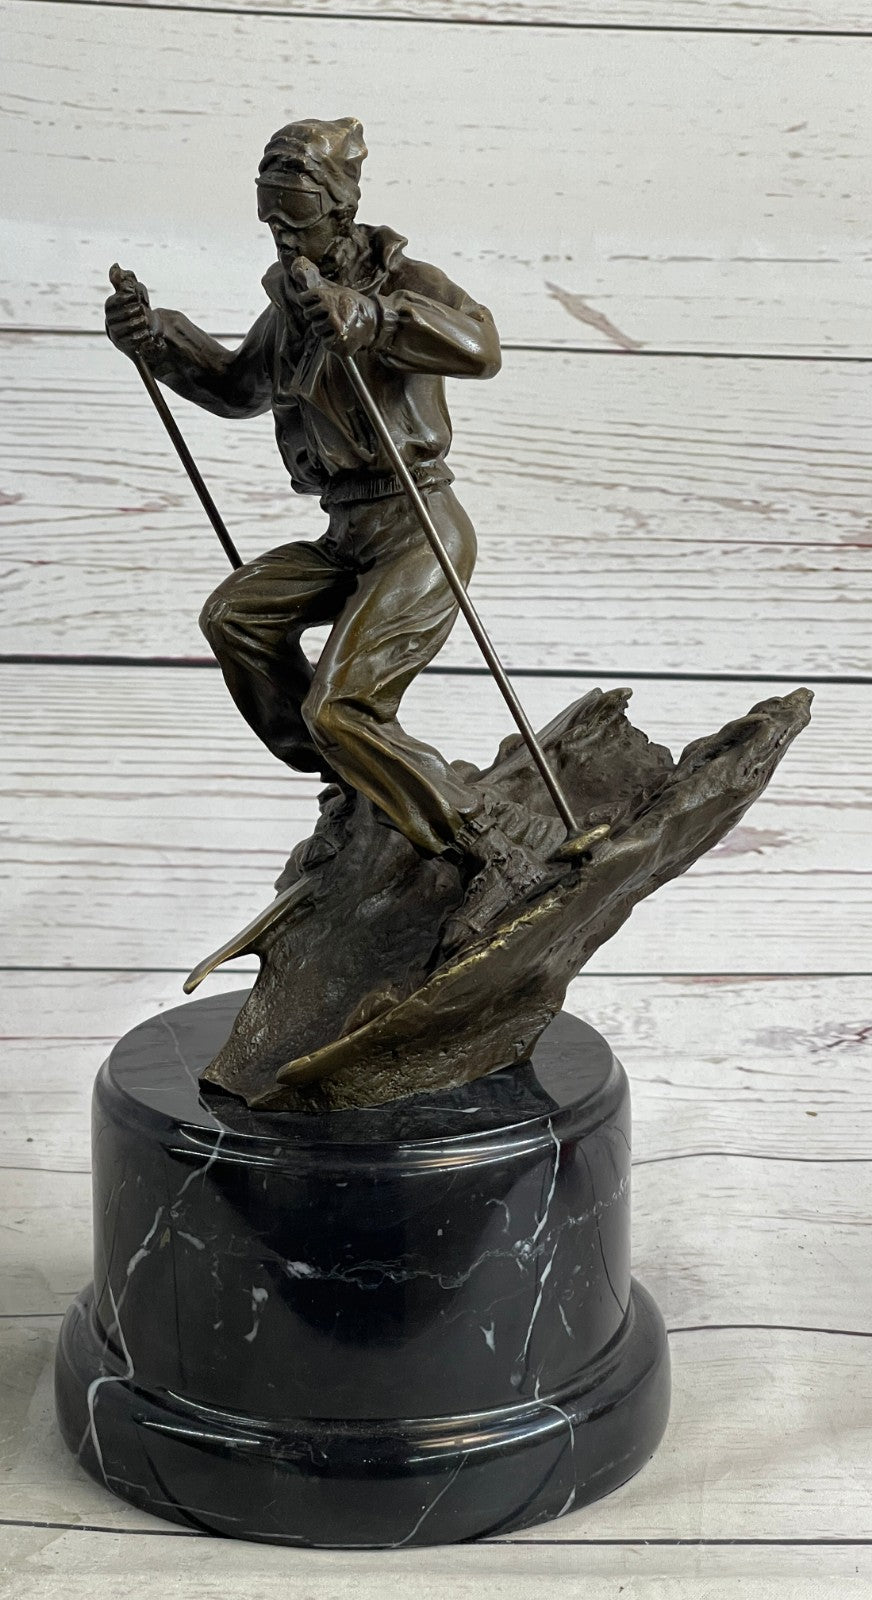 Signed: NICK Bronze Sculpture skier men skiiing snow ski sports Statue Figurine